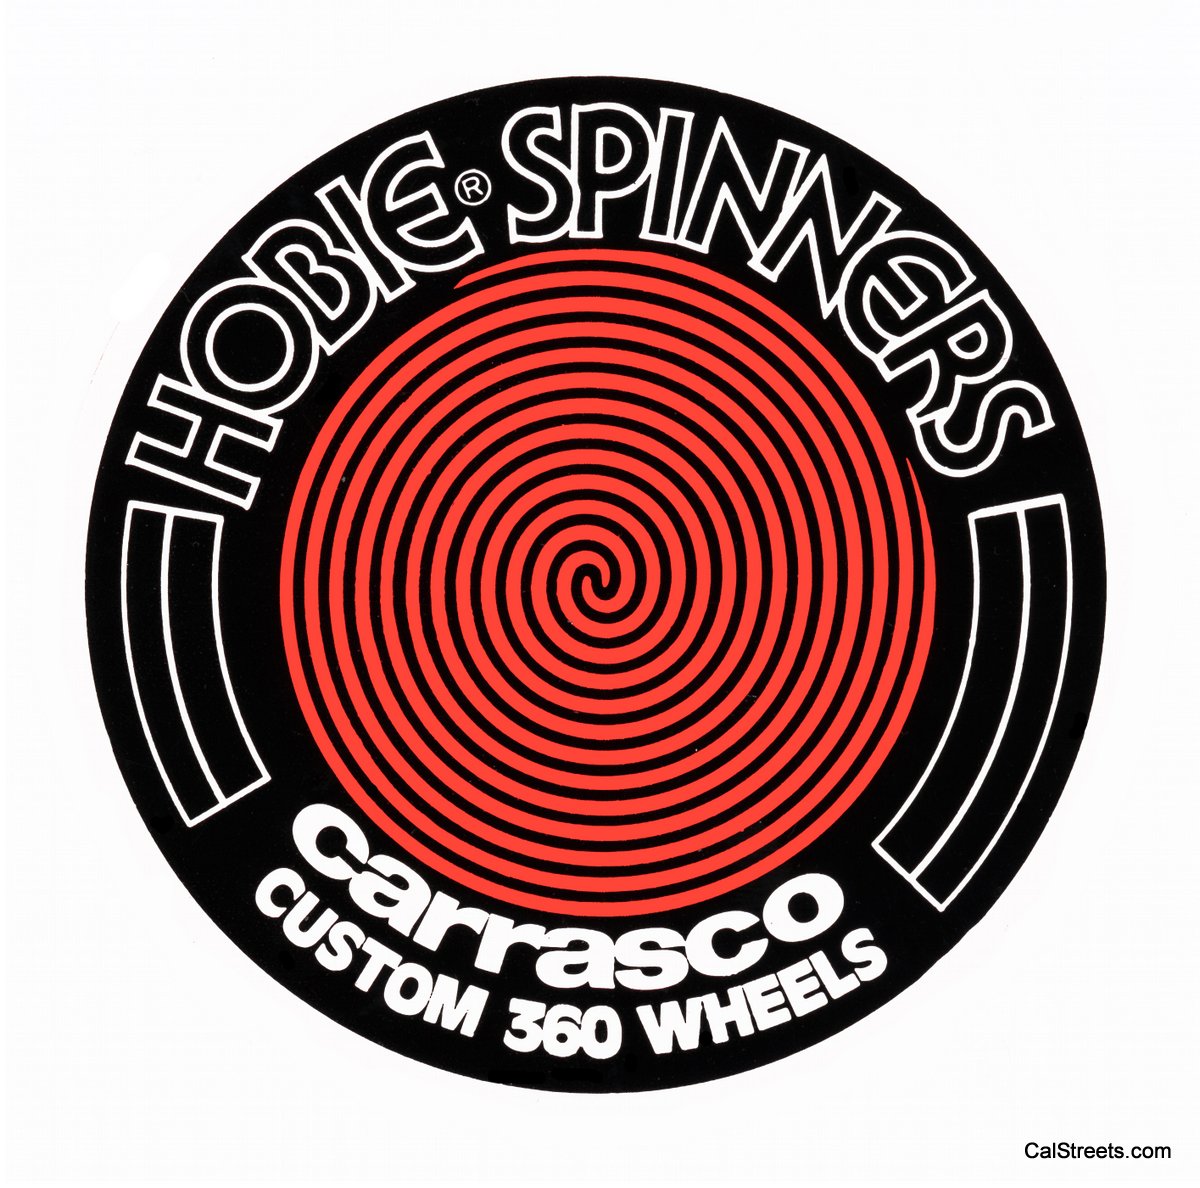 Hobie-Spinners-Carrasco-Custom-360-Wheels-RFX1.jpg